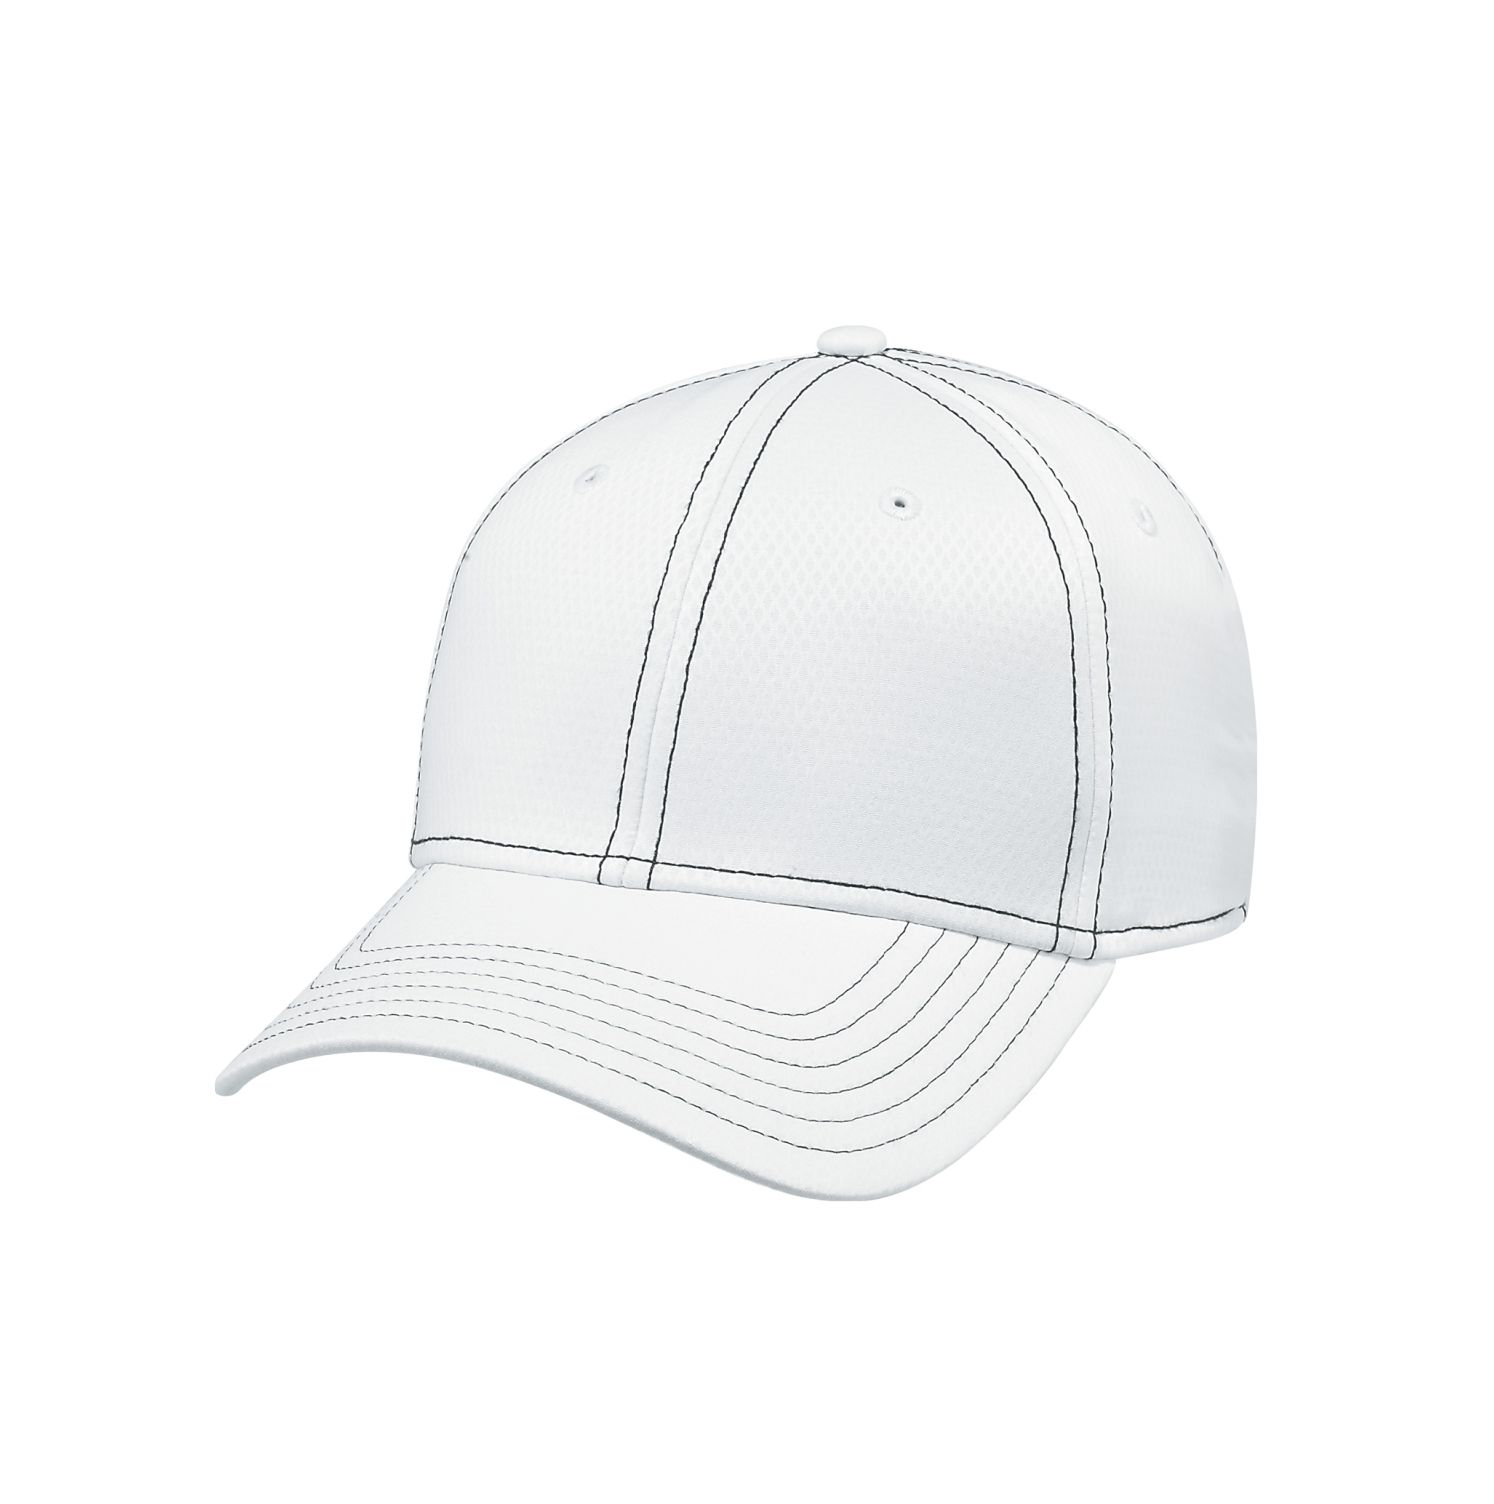 AJM Polyester Diamond & Spandex 6 Panel Constructed Contour Hat #AC0007 White / Black